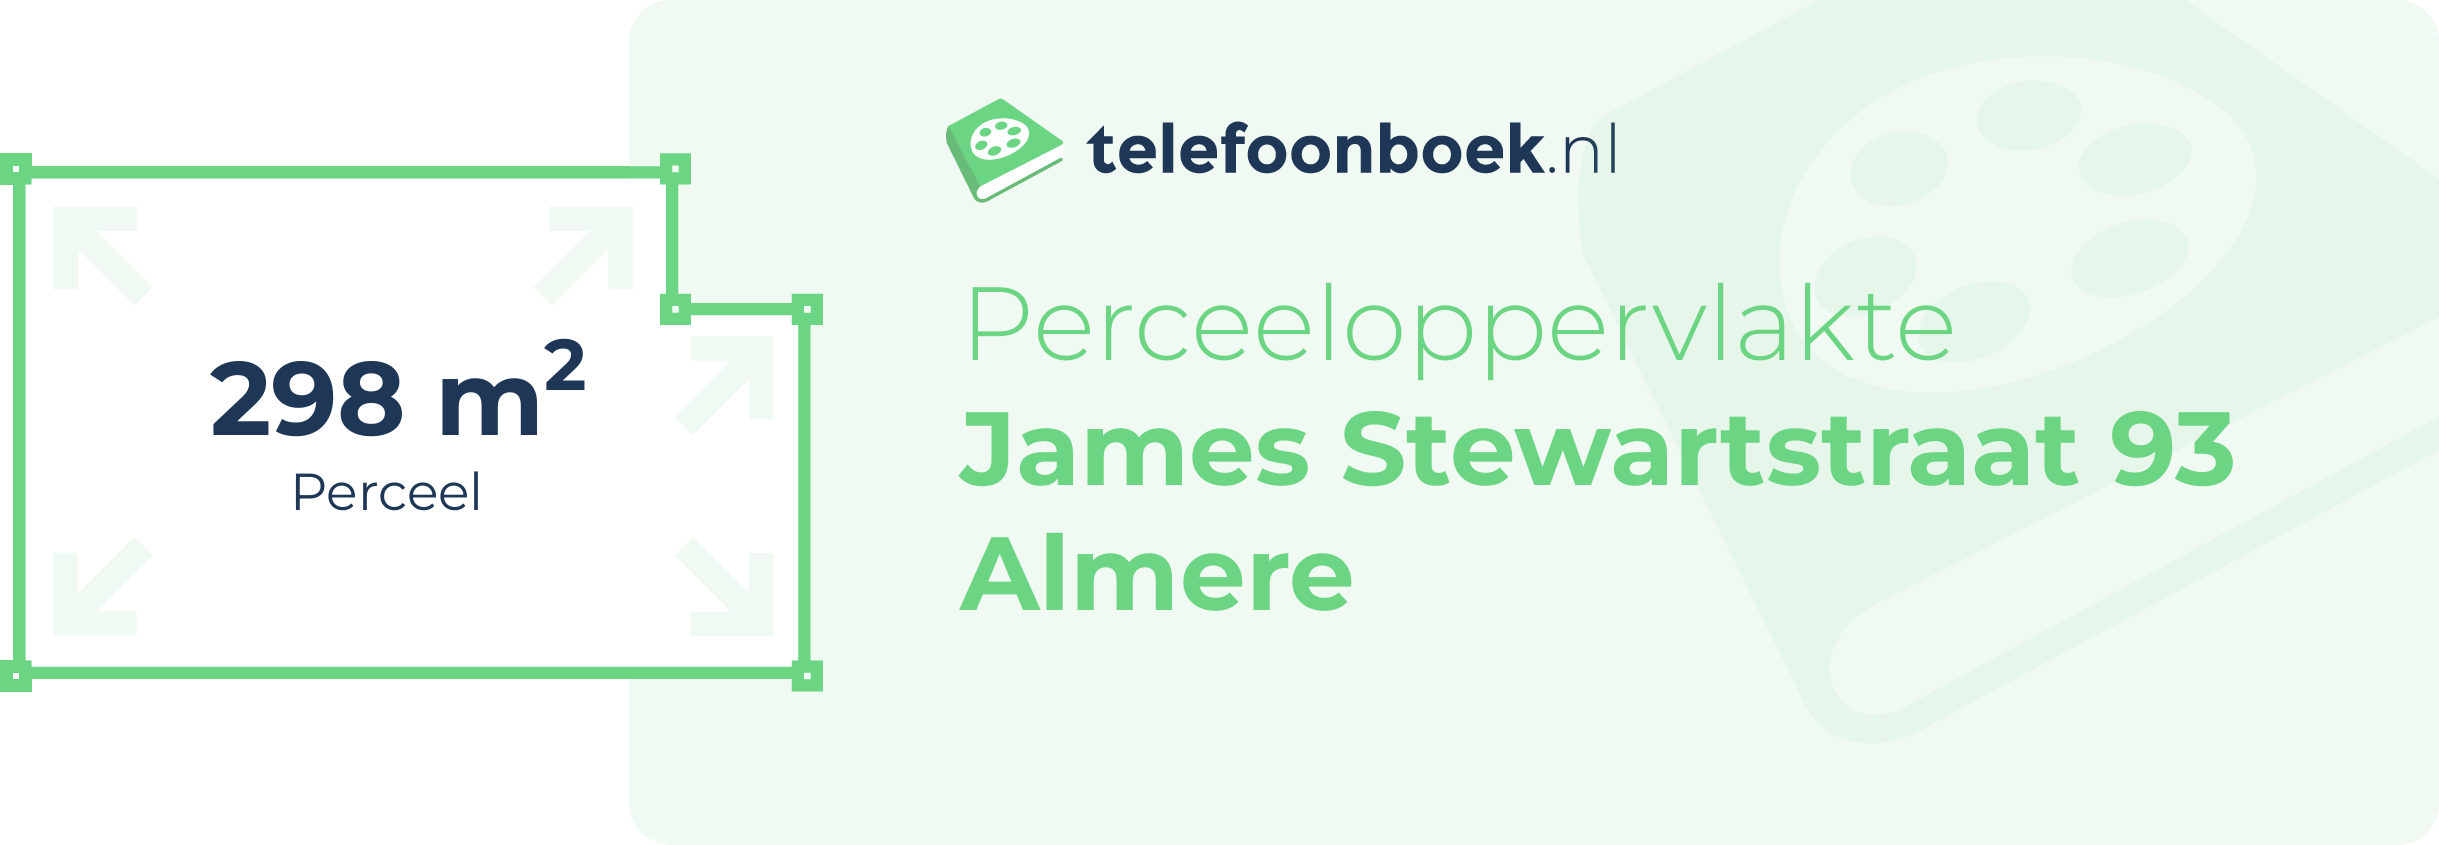 Perceeloppervlakte James Stewartstraat 93 Almere